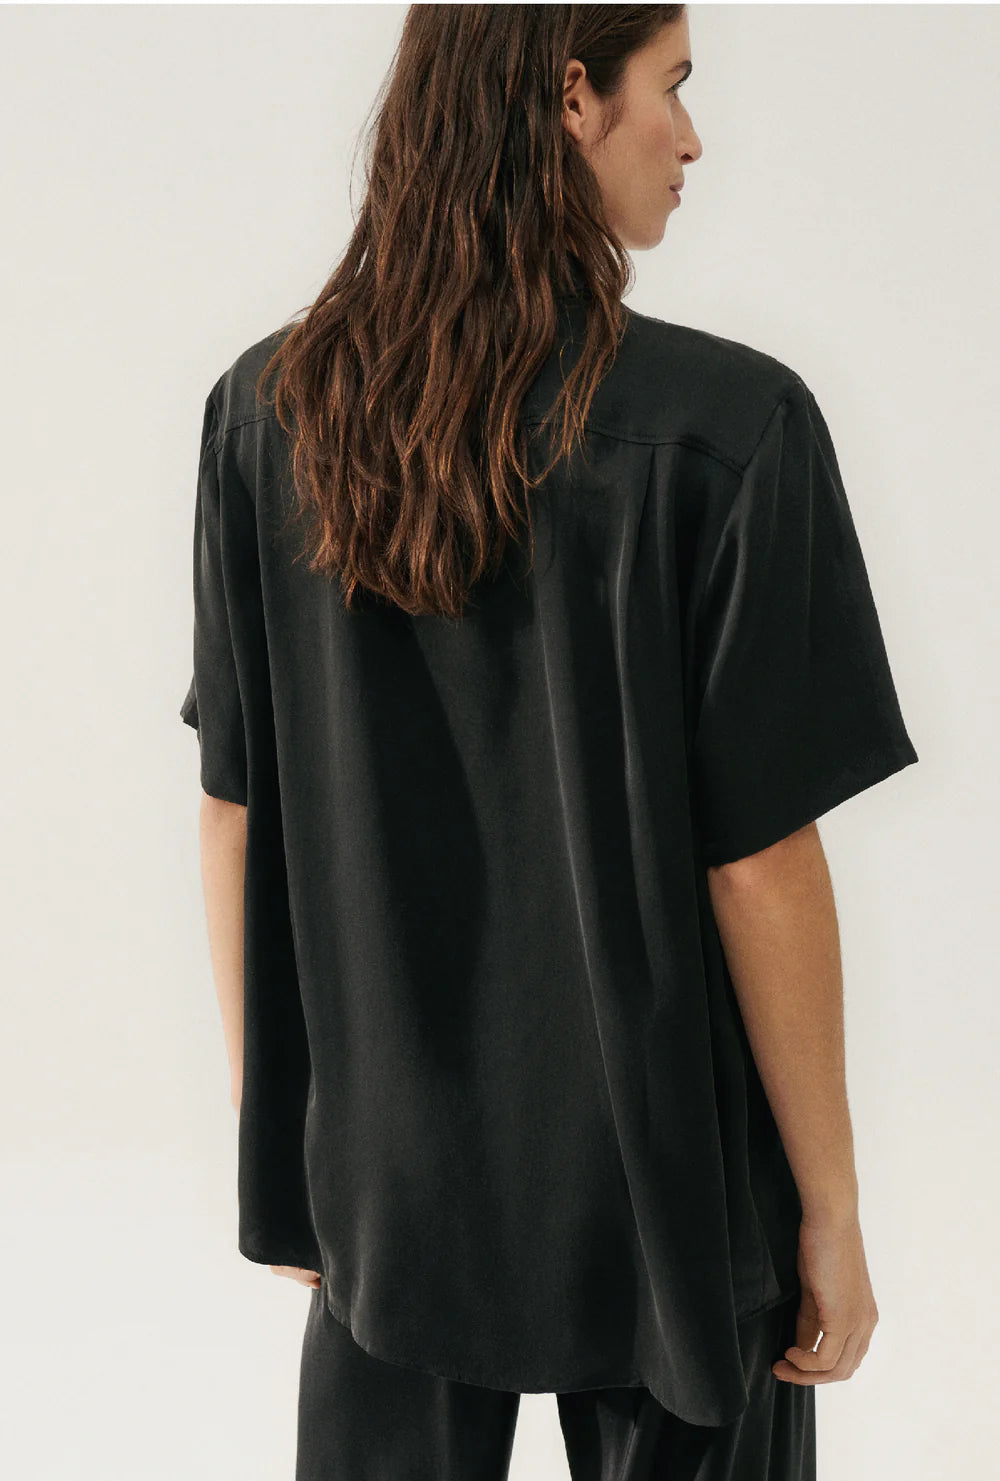 Silk Laundry CDC Short Sleeve Boyfriend Shirt Black